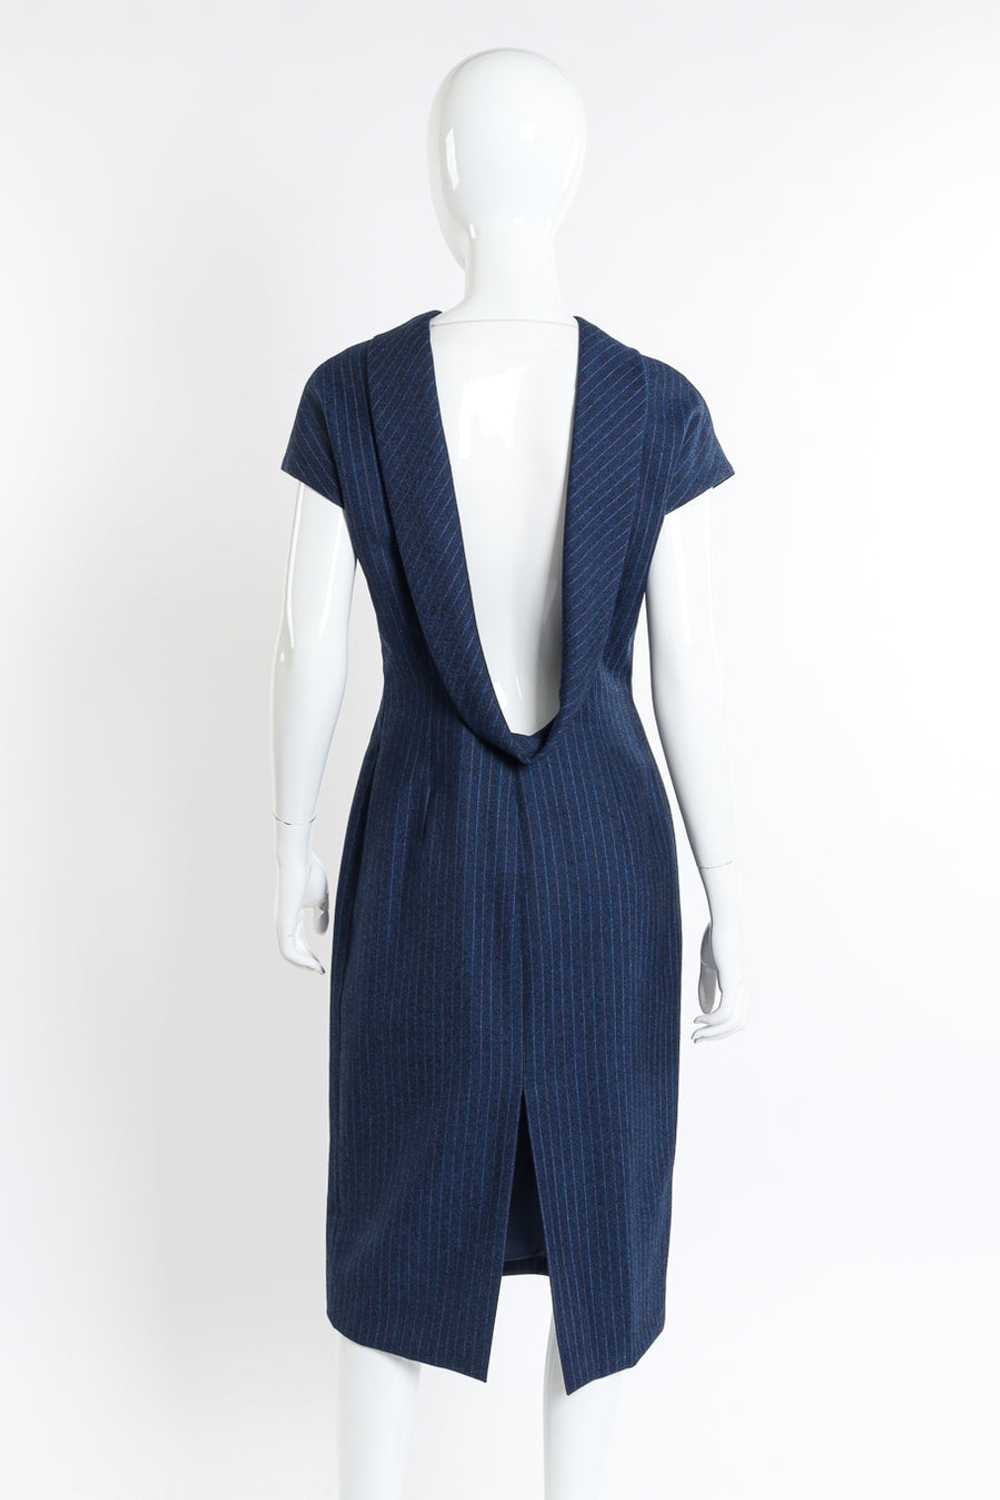 GIVENCHY 1998 F/W Wool Pinstripe Dress - image 5